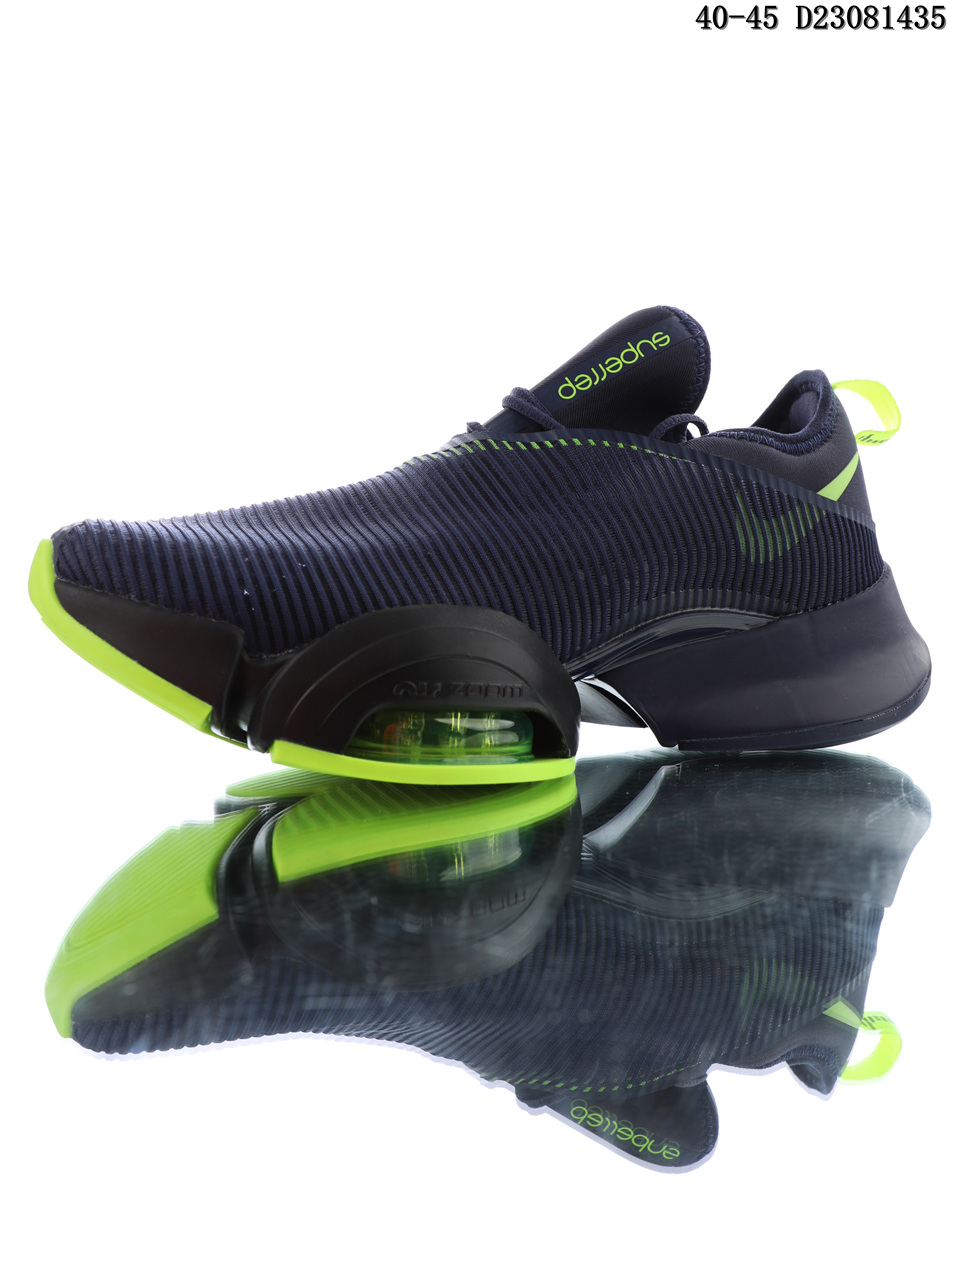 Nike Air Zoom Superrep black green jogging shoes side